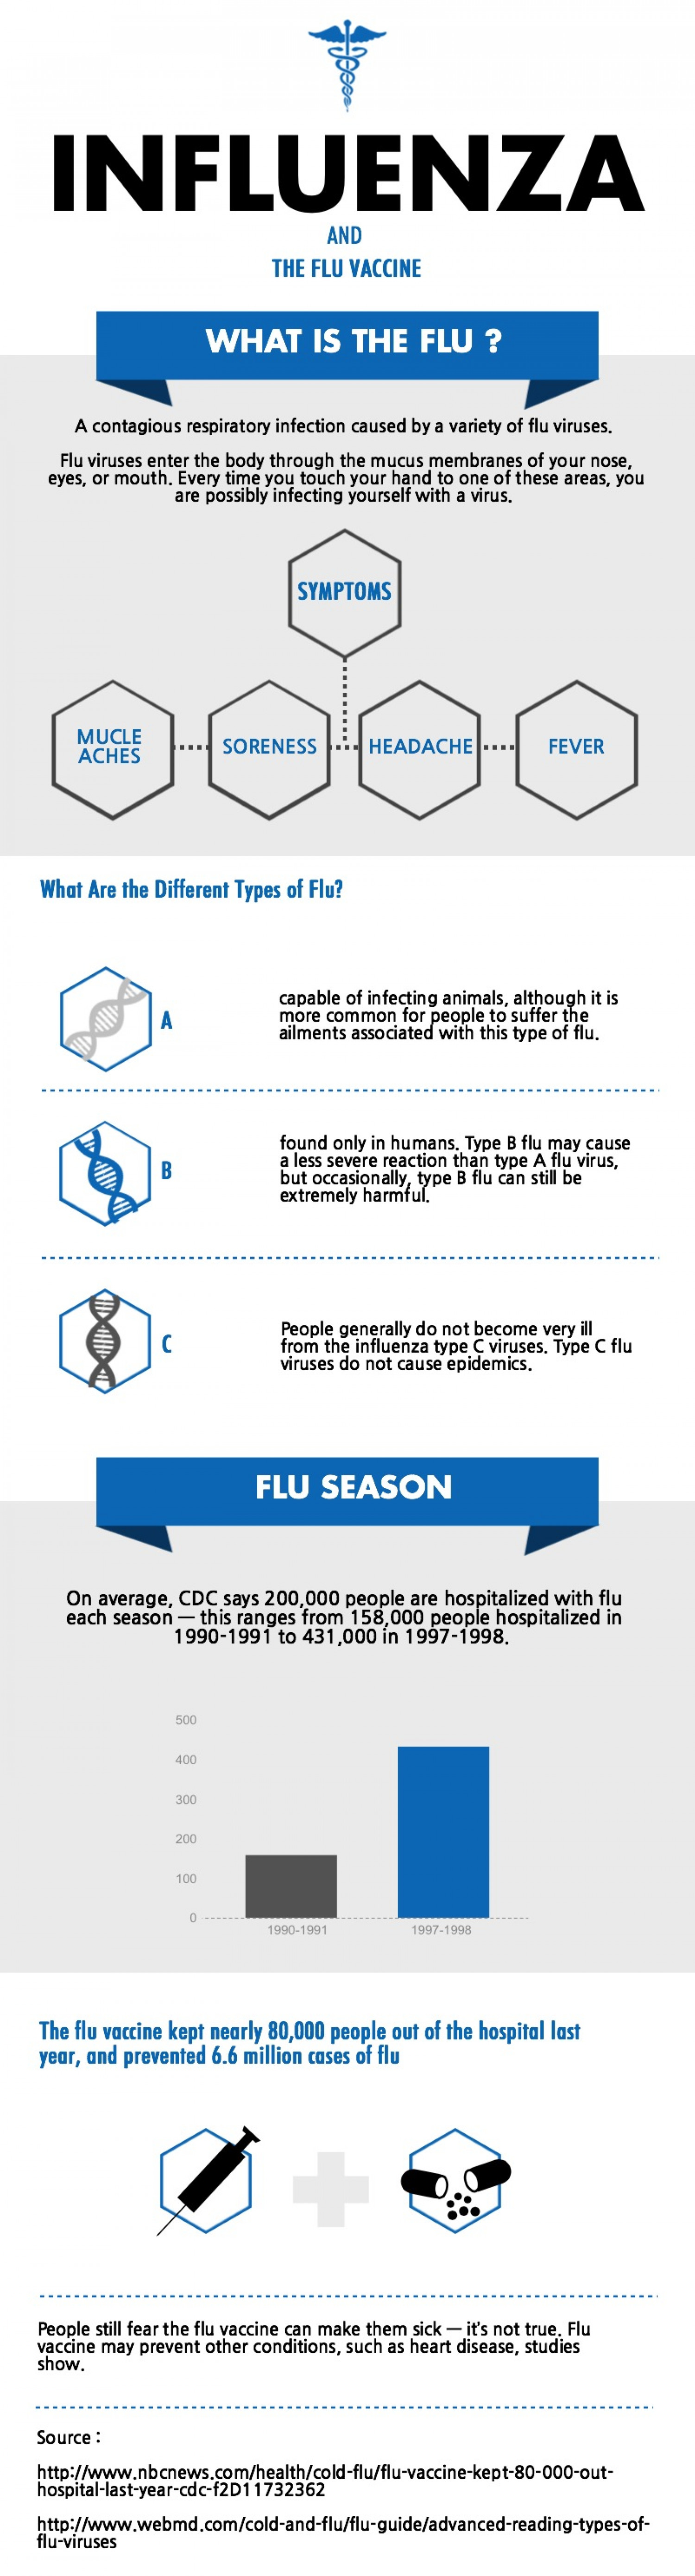 Flu Season Infographic